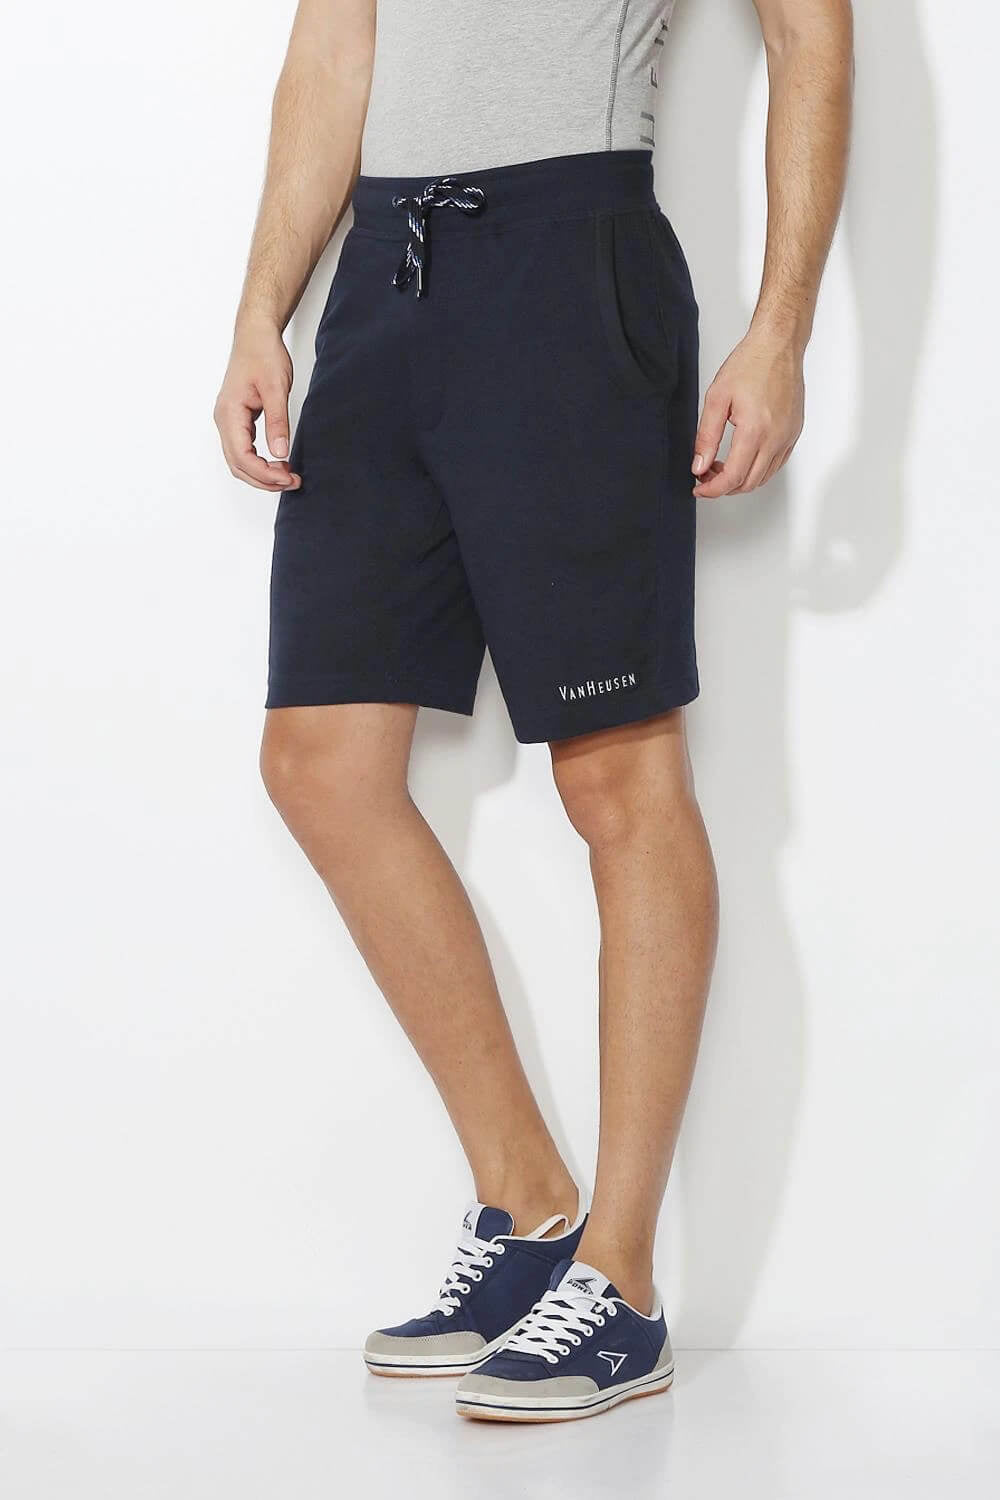 Van Heusen Navy Knit Shorts for Men #50001